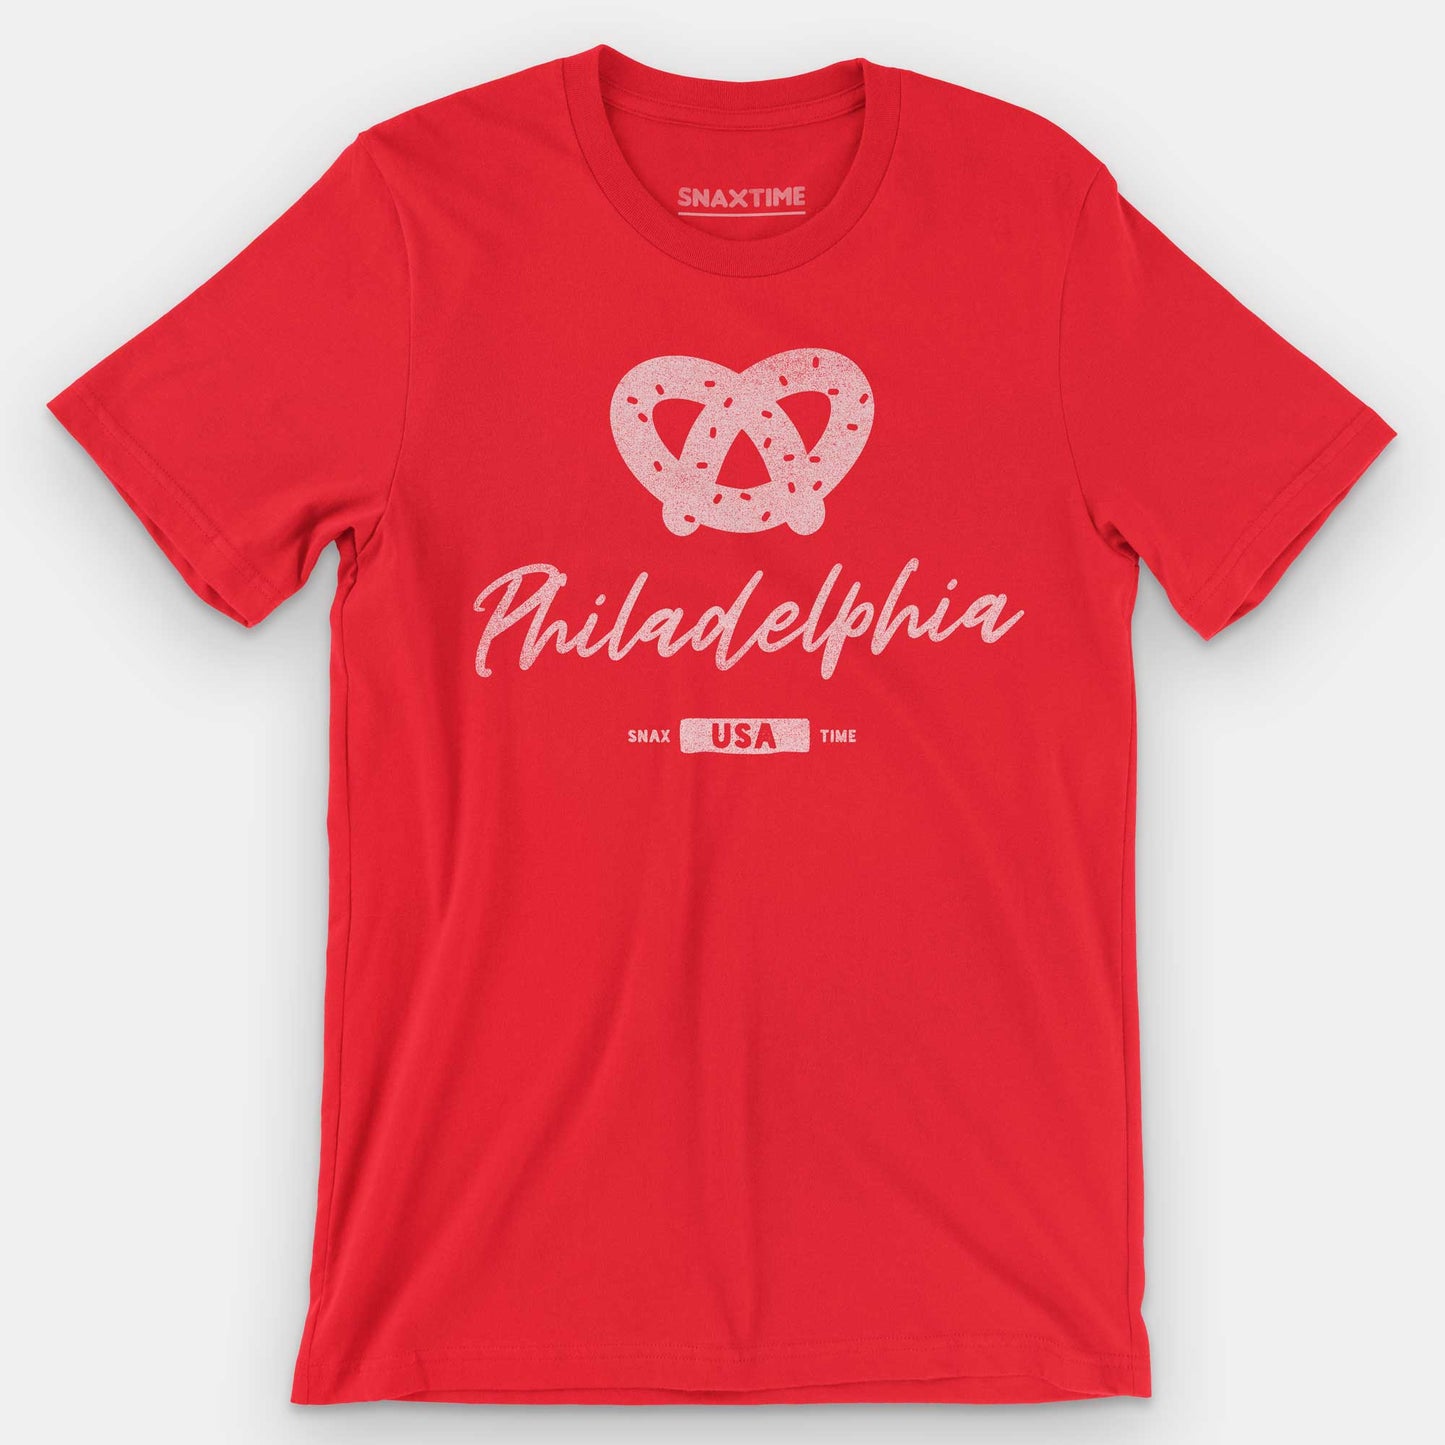 Red Philadelphia Soft Pretzel Graphic T-Shirt by Snaxtime